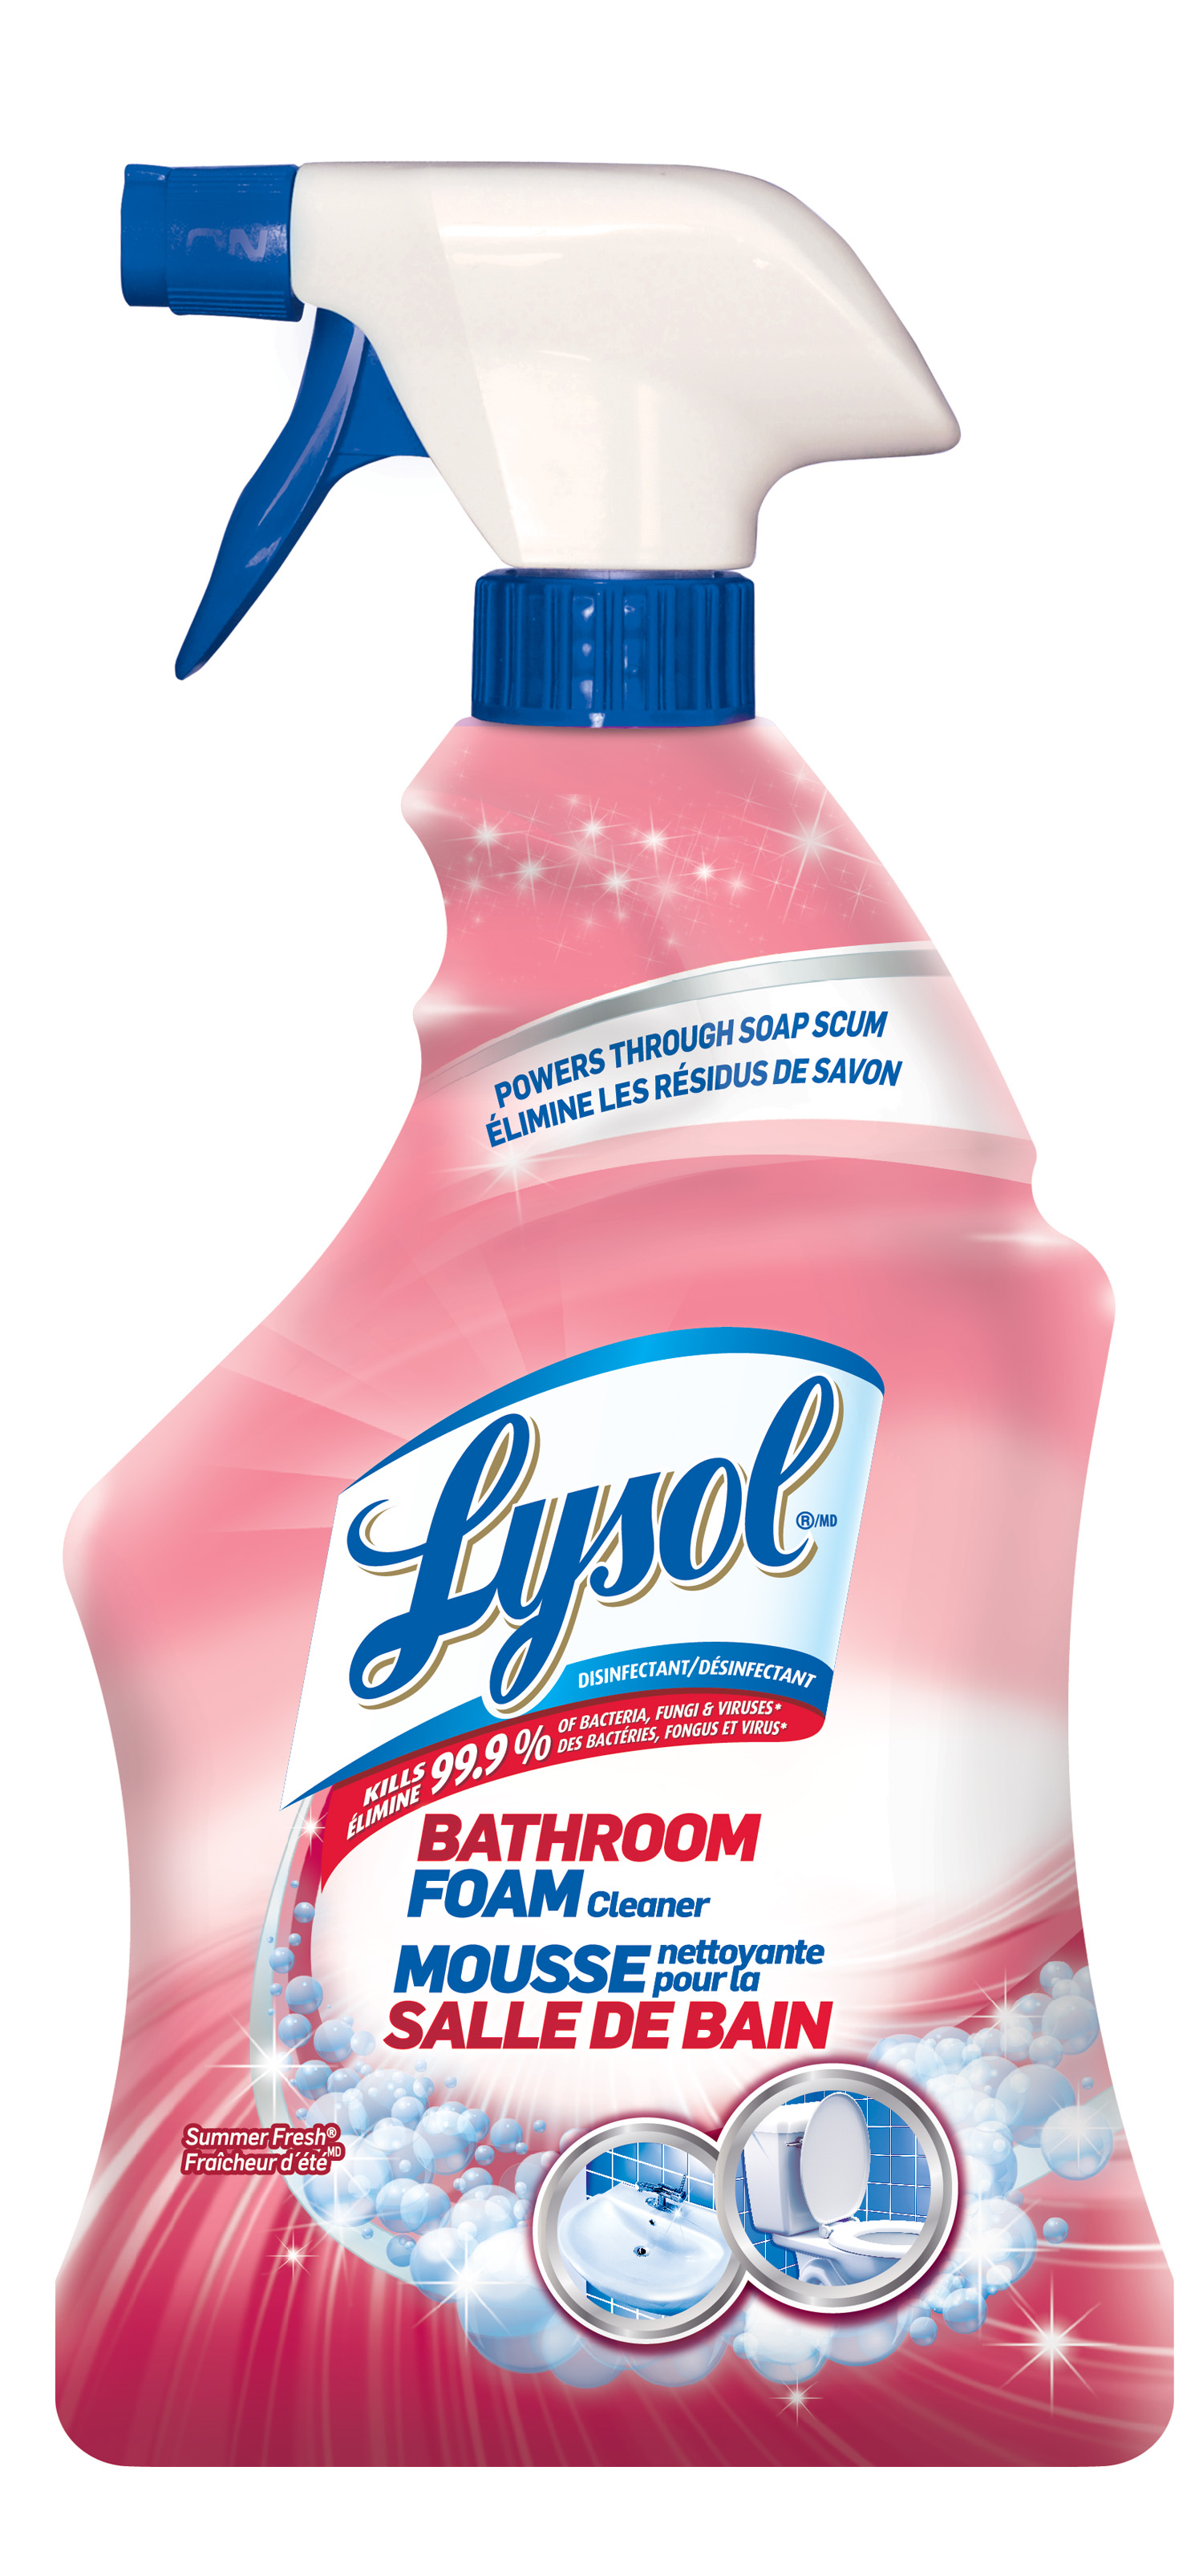 LYSOL® Disinfectant Bathroom Foam Cleaner - Summer Fresh (Canada) (Discontinued Jan. 2022)